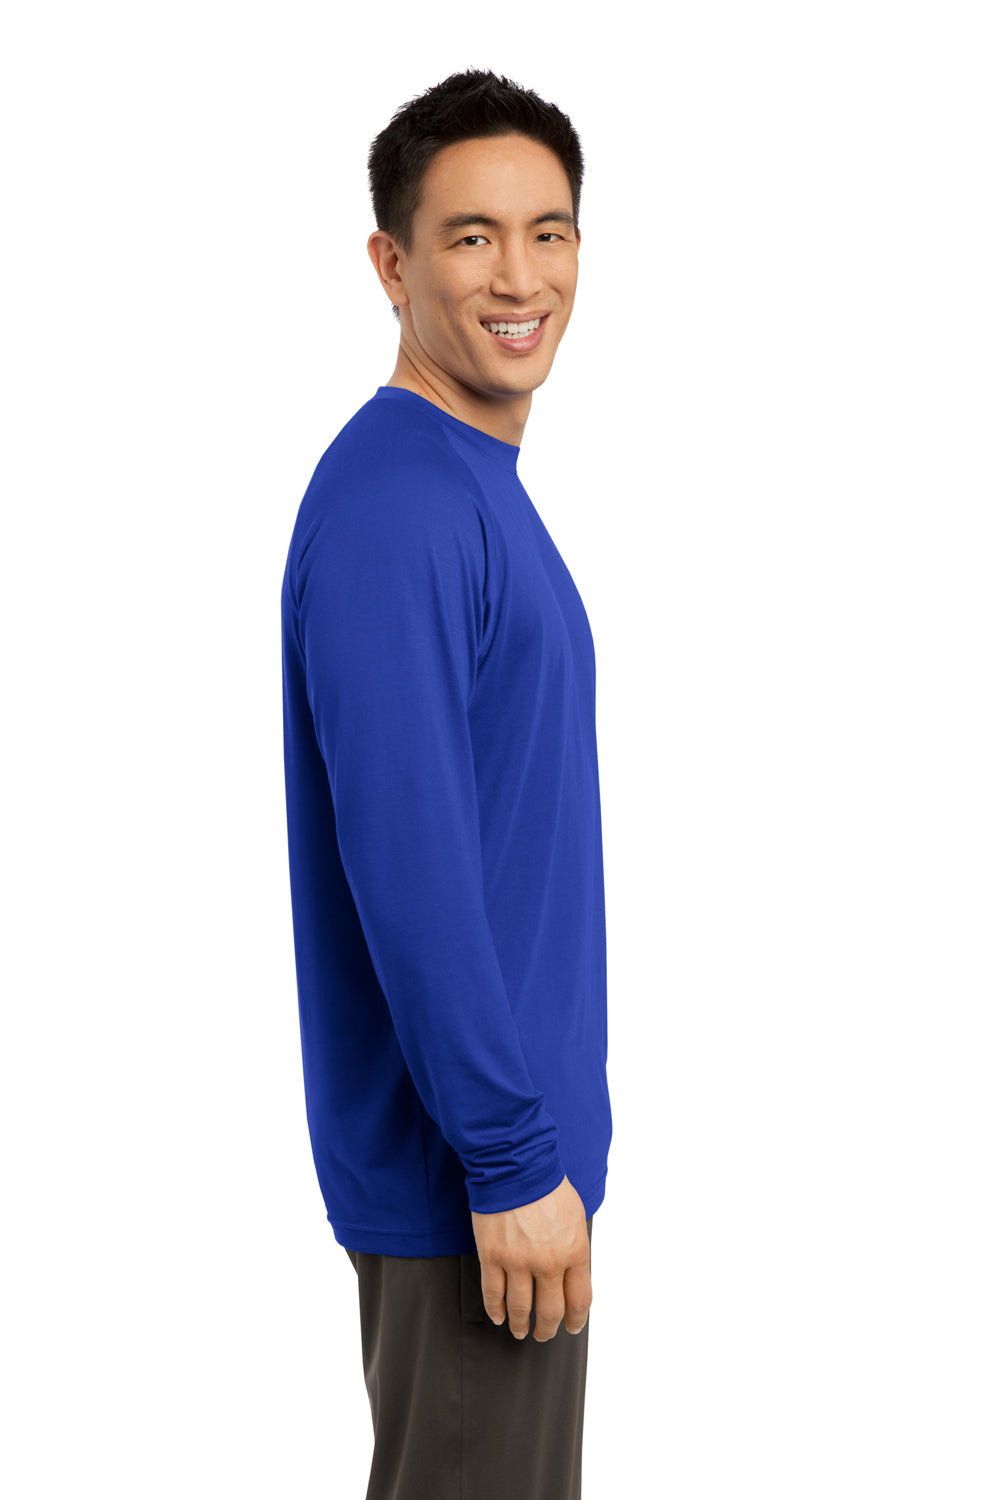 Sport-Tek ST700LS Mens Ultimate Performance Moisture Wicking Long Sleeve Crewneck T-Shirt Royal Blue Side